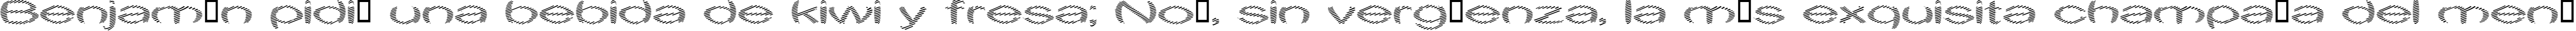 Пример написания шрифтом Obtuse One текста на испанском